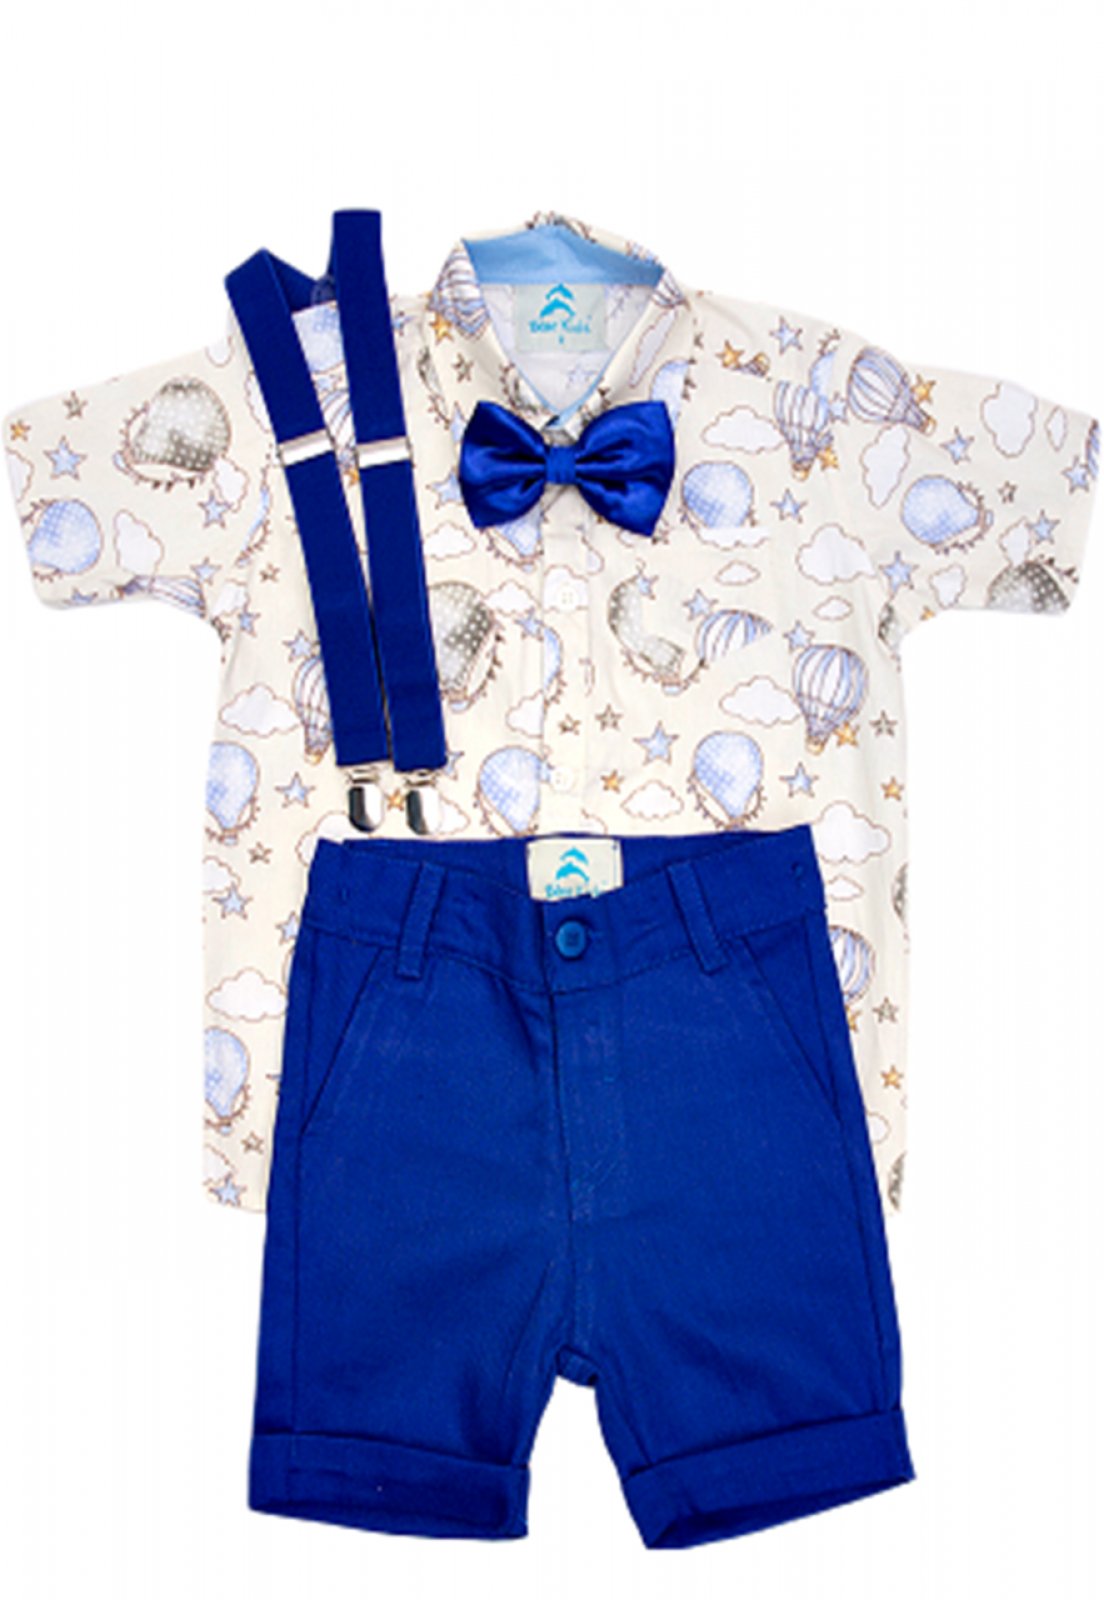 camisa social infantil azul marinho